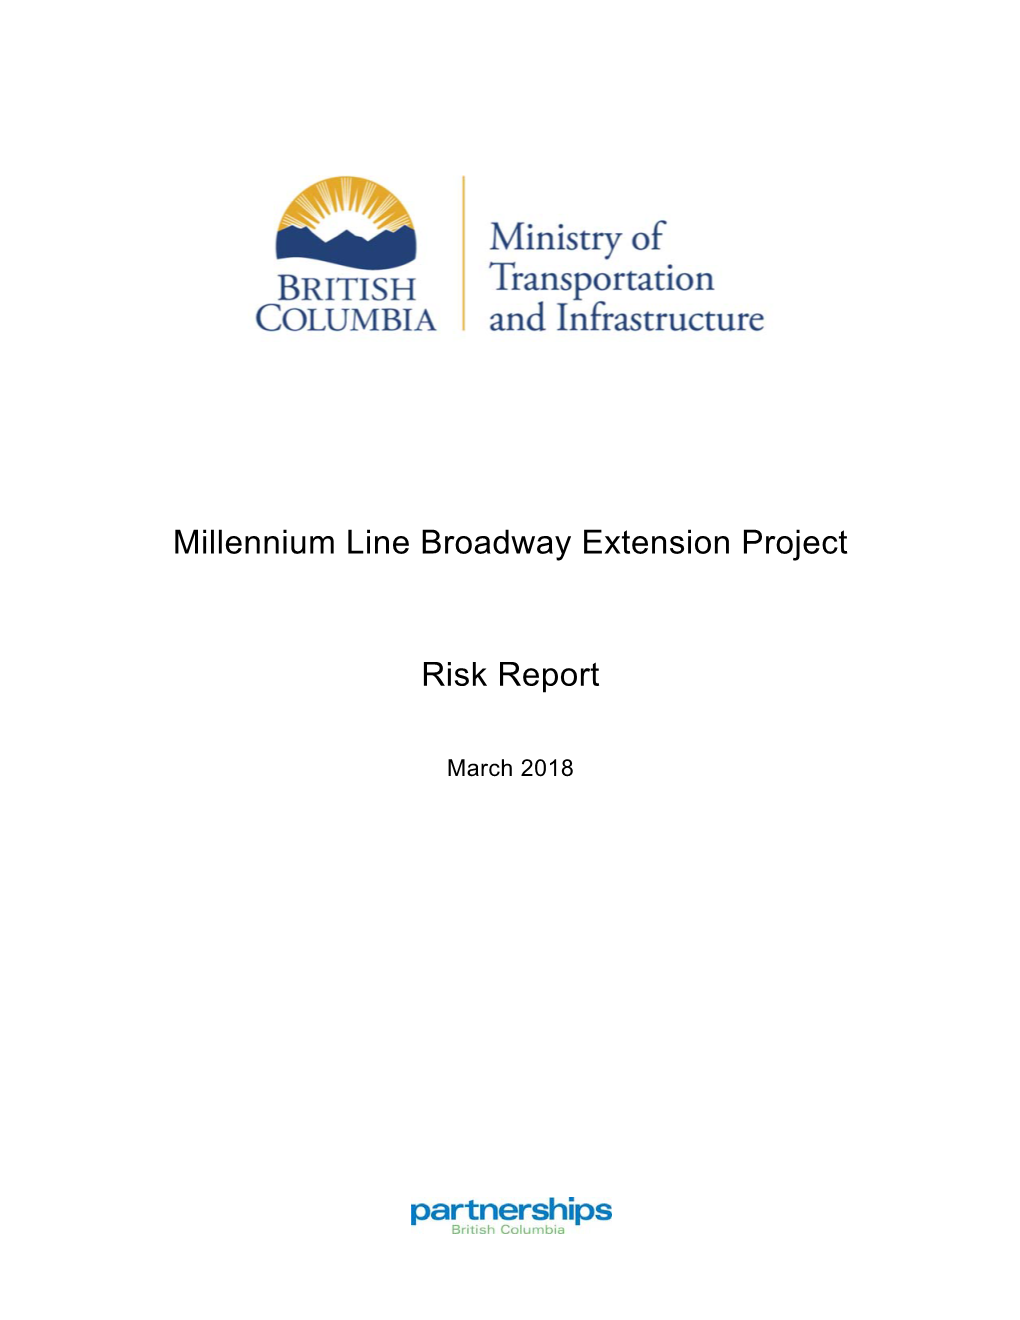 Millennium Line Broadway Extension Project Risk Report